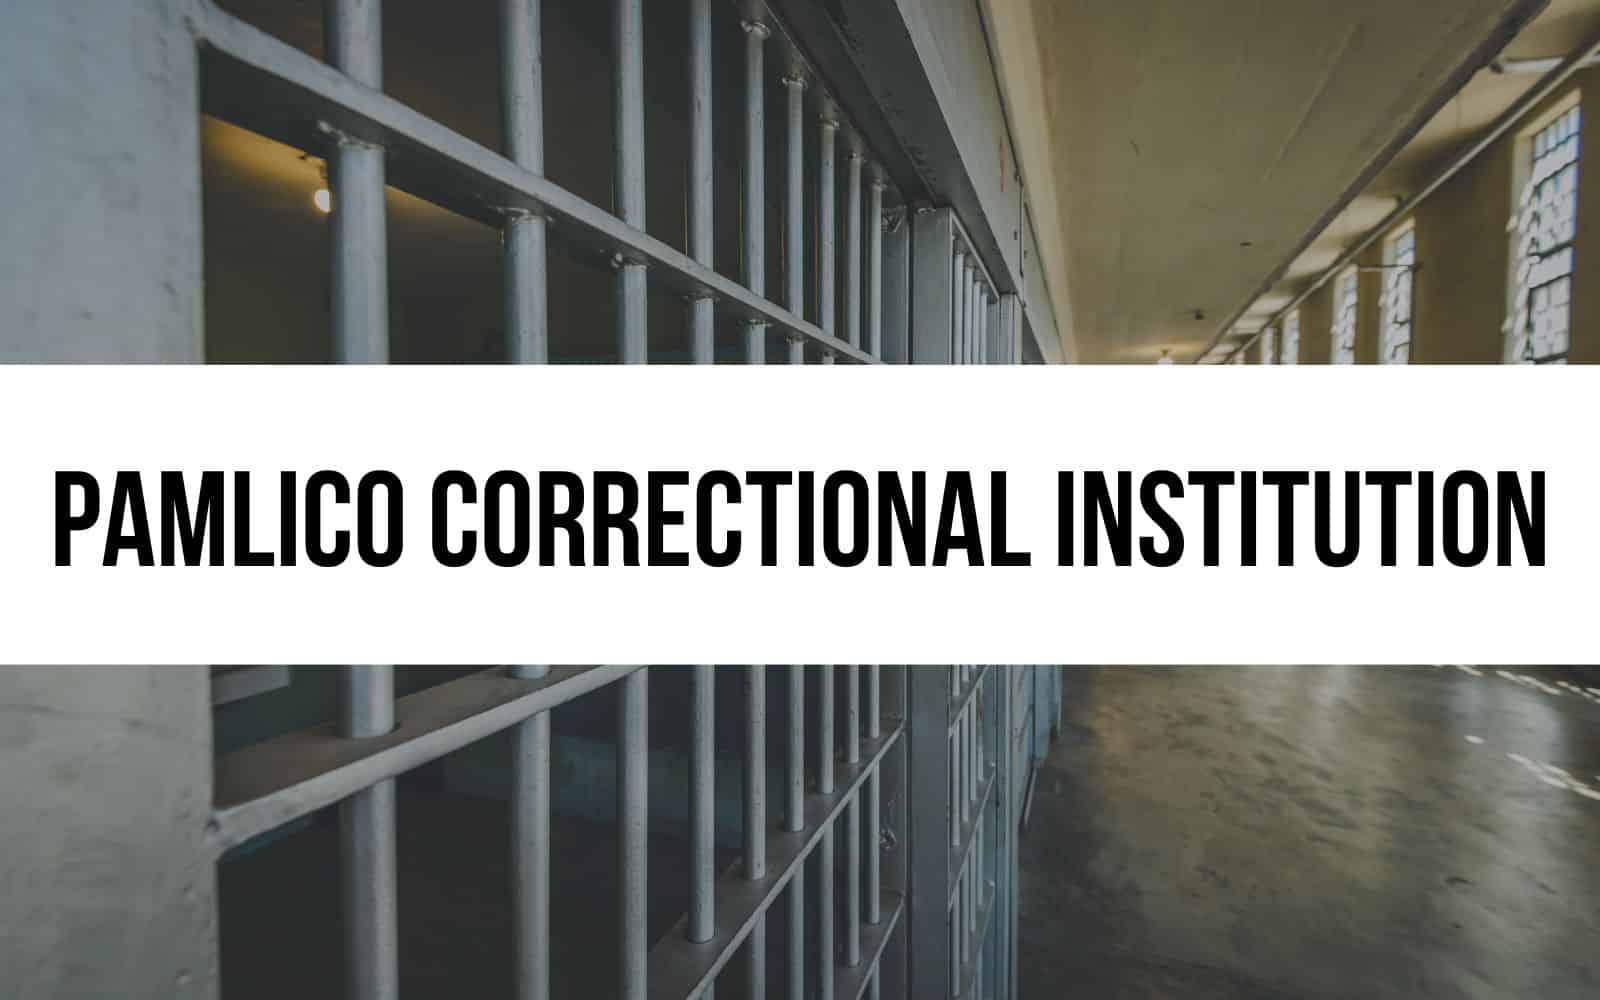 Pamlico Correctional Institution